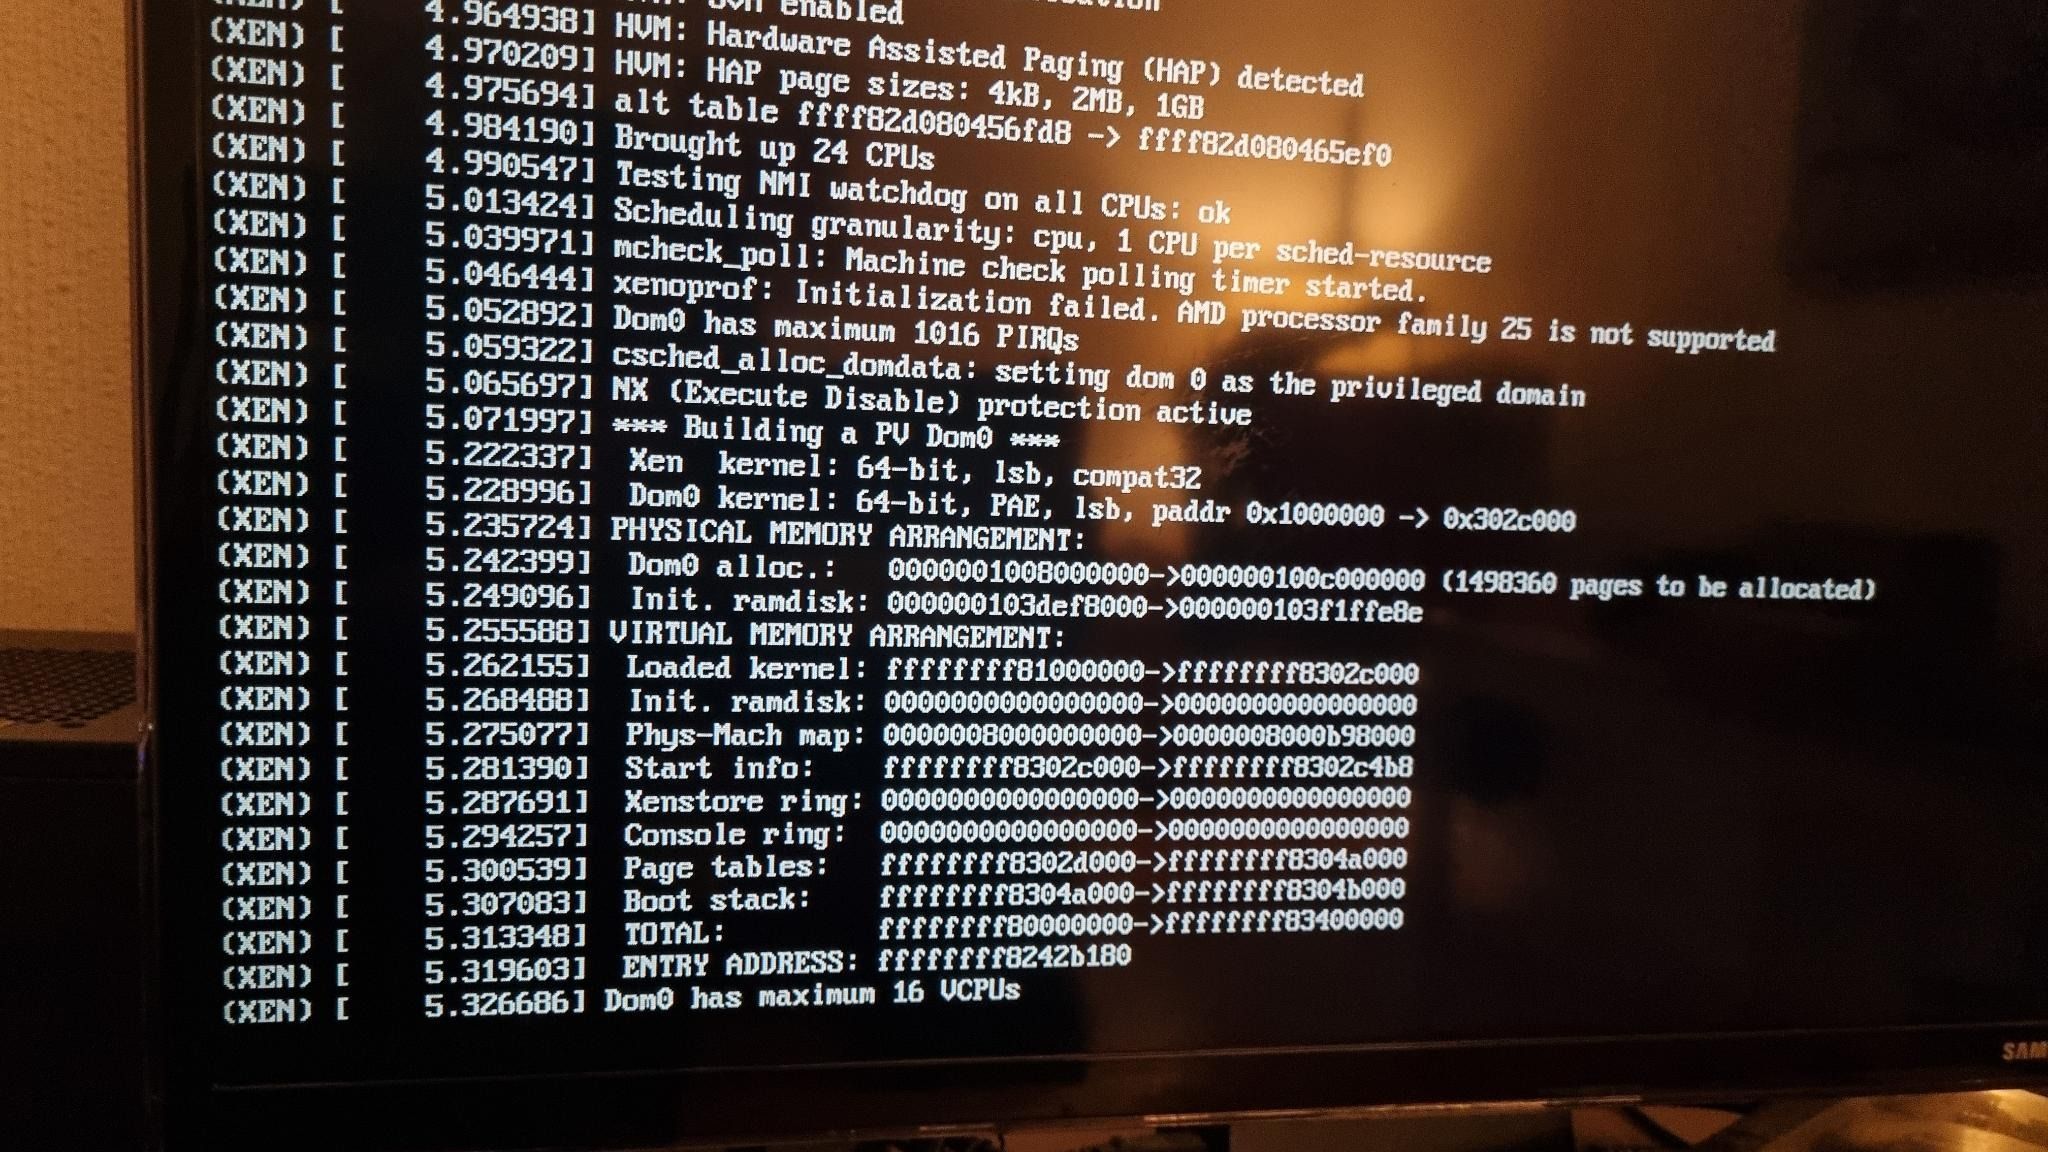 Question - Black screen when trying to start UEFI BIOS